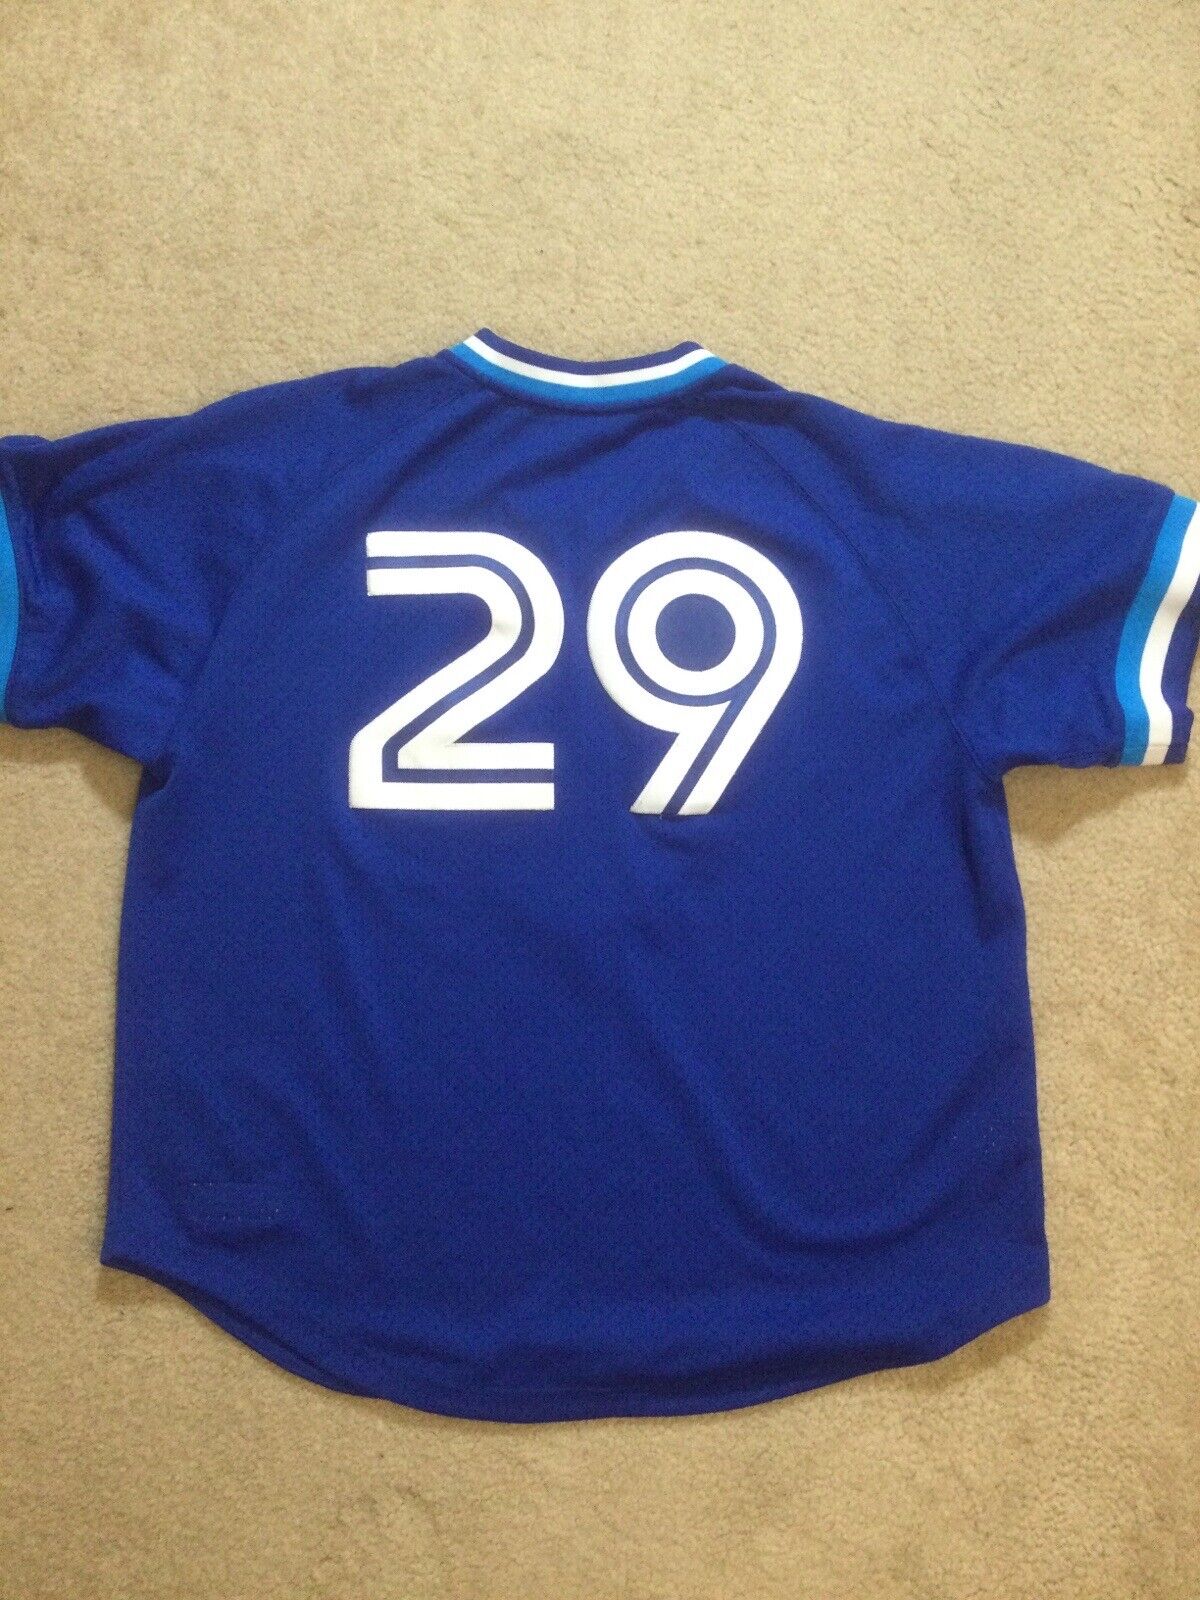 Mitchell & Ness MLB Toronto Bluejays #29 Joe Carter Jersey, Size 48,  Preowned